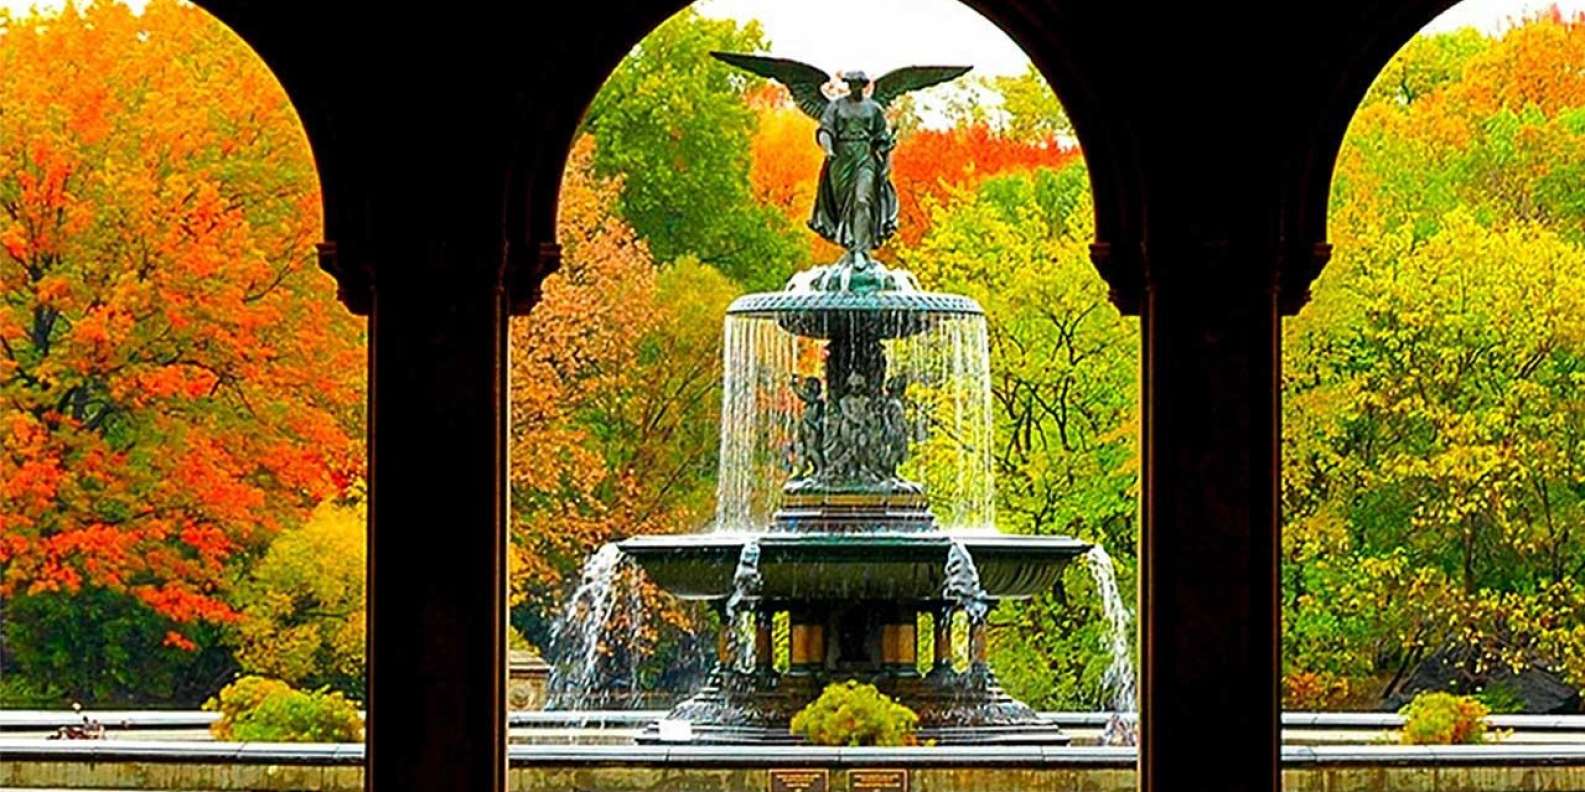 Bethesda Fountain Central Park Bethesda Terrace New York -  Norway